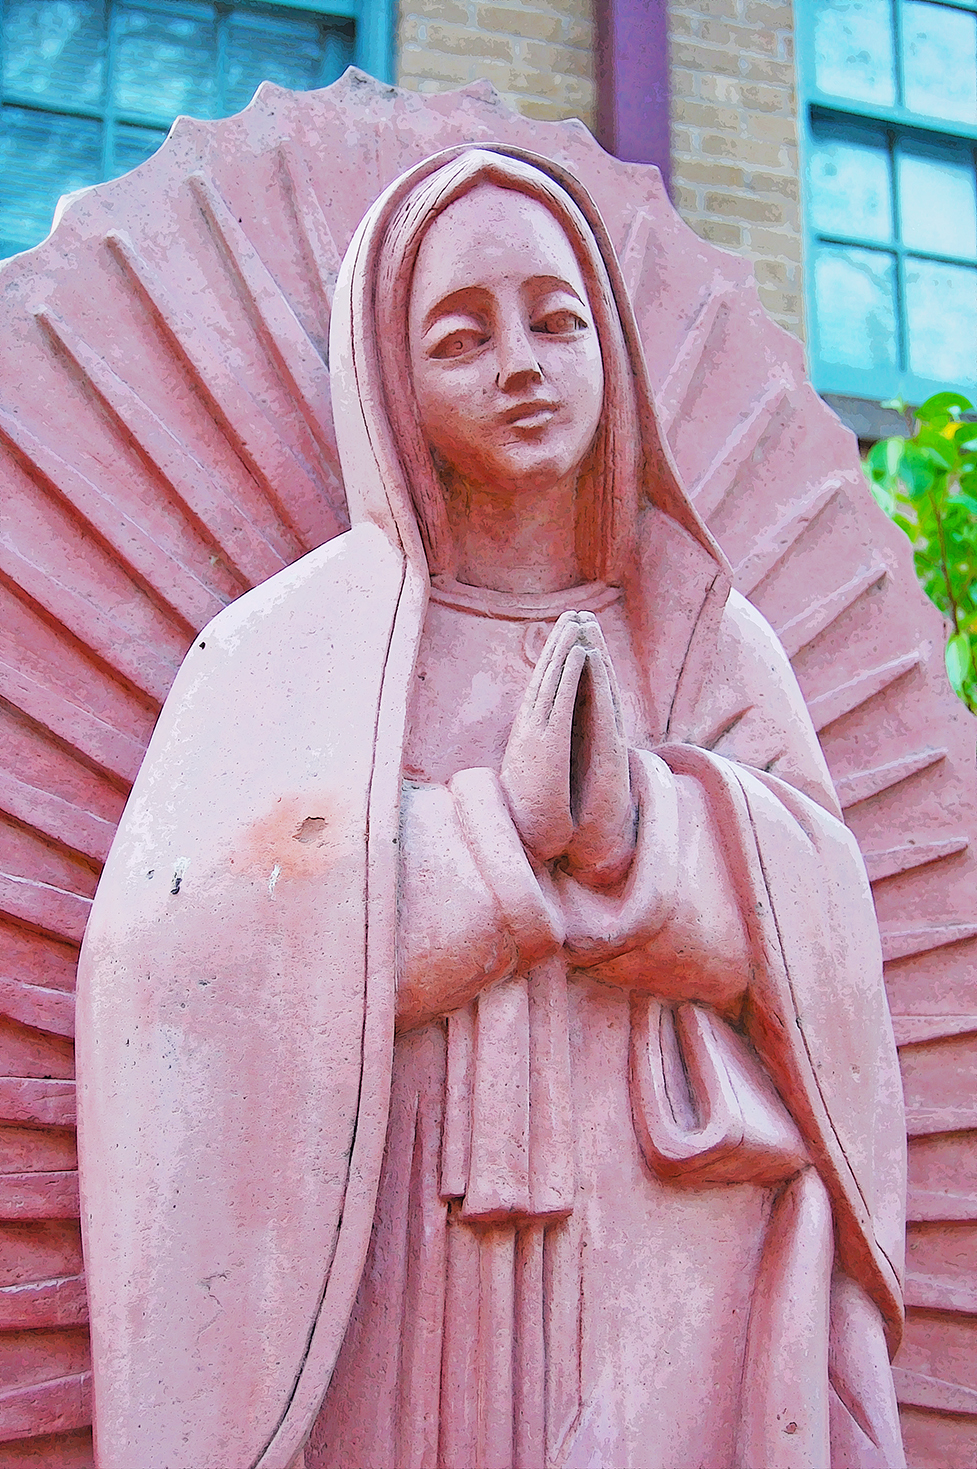 Our Lady of Guadalupe Corpus Christi Texas 15 February 2009